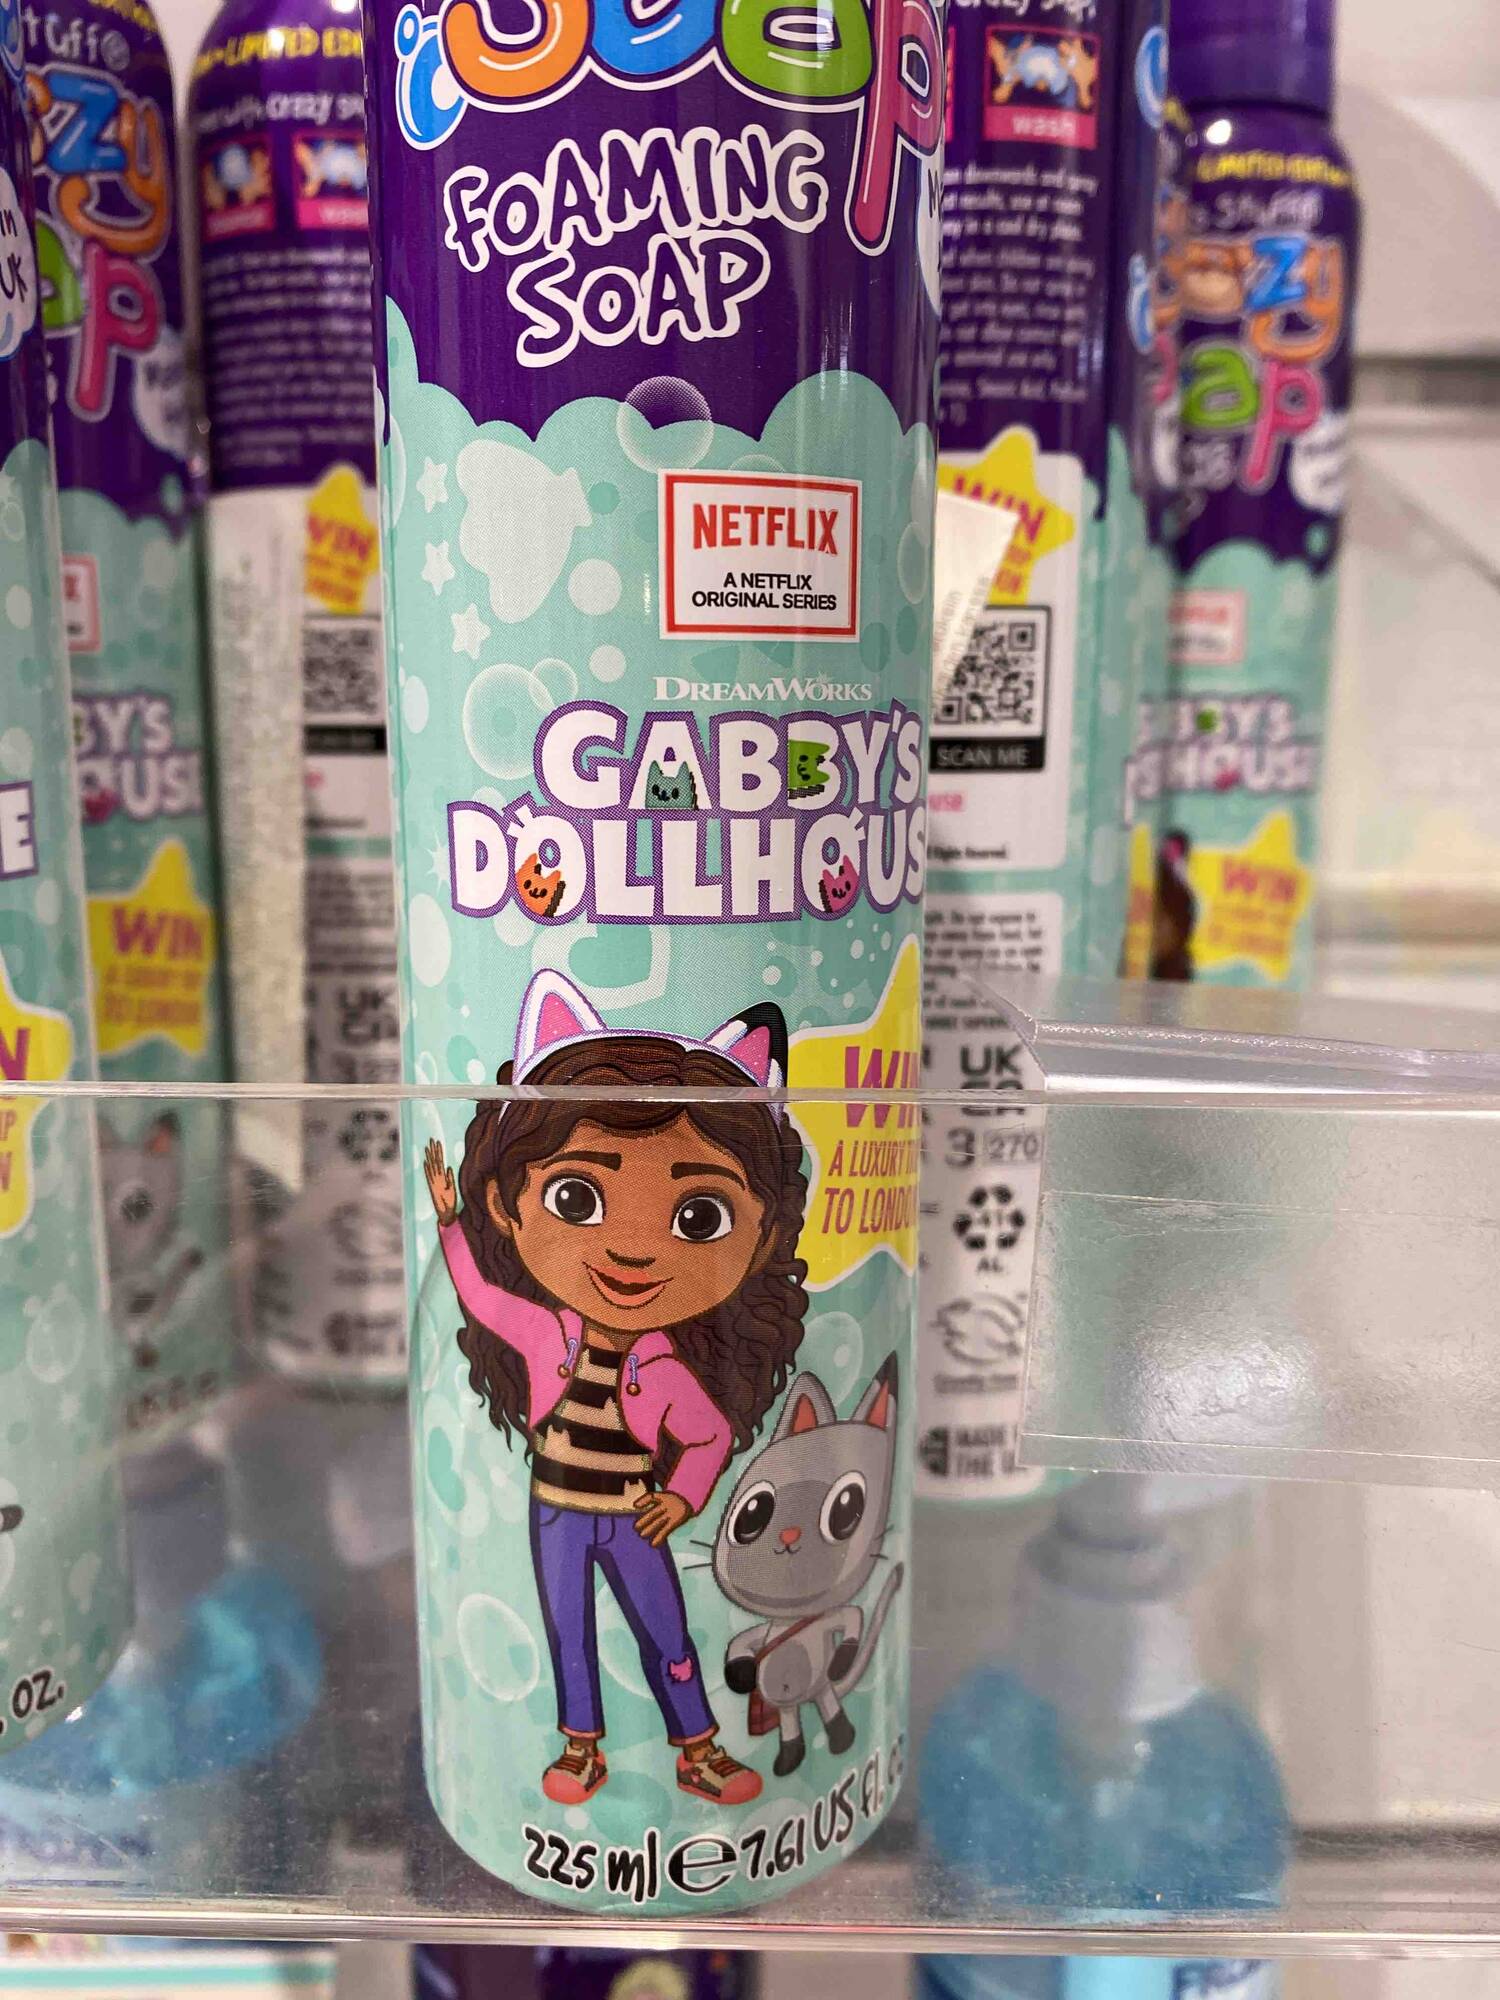 DREAM WORKS - Gabby's Dollhouse - Foaming soap